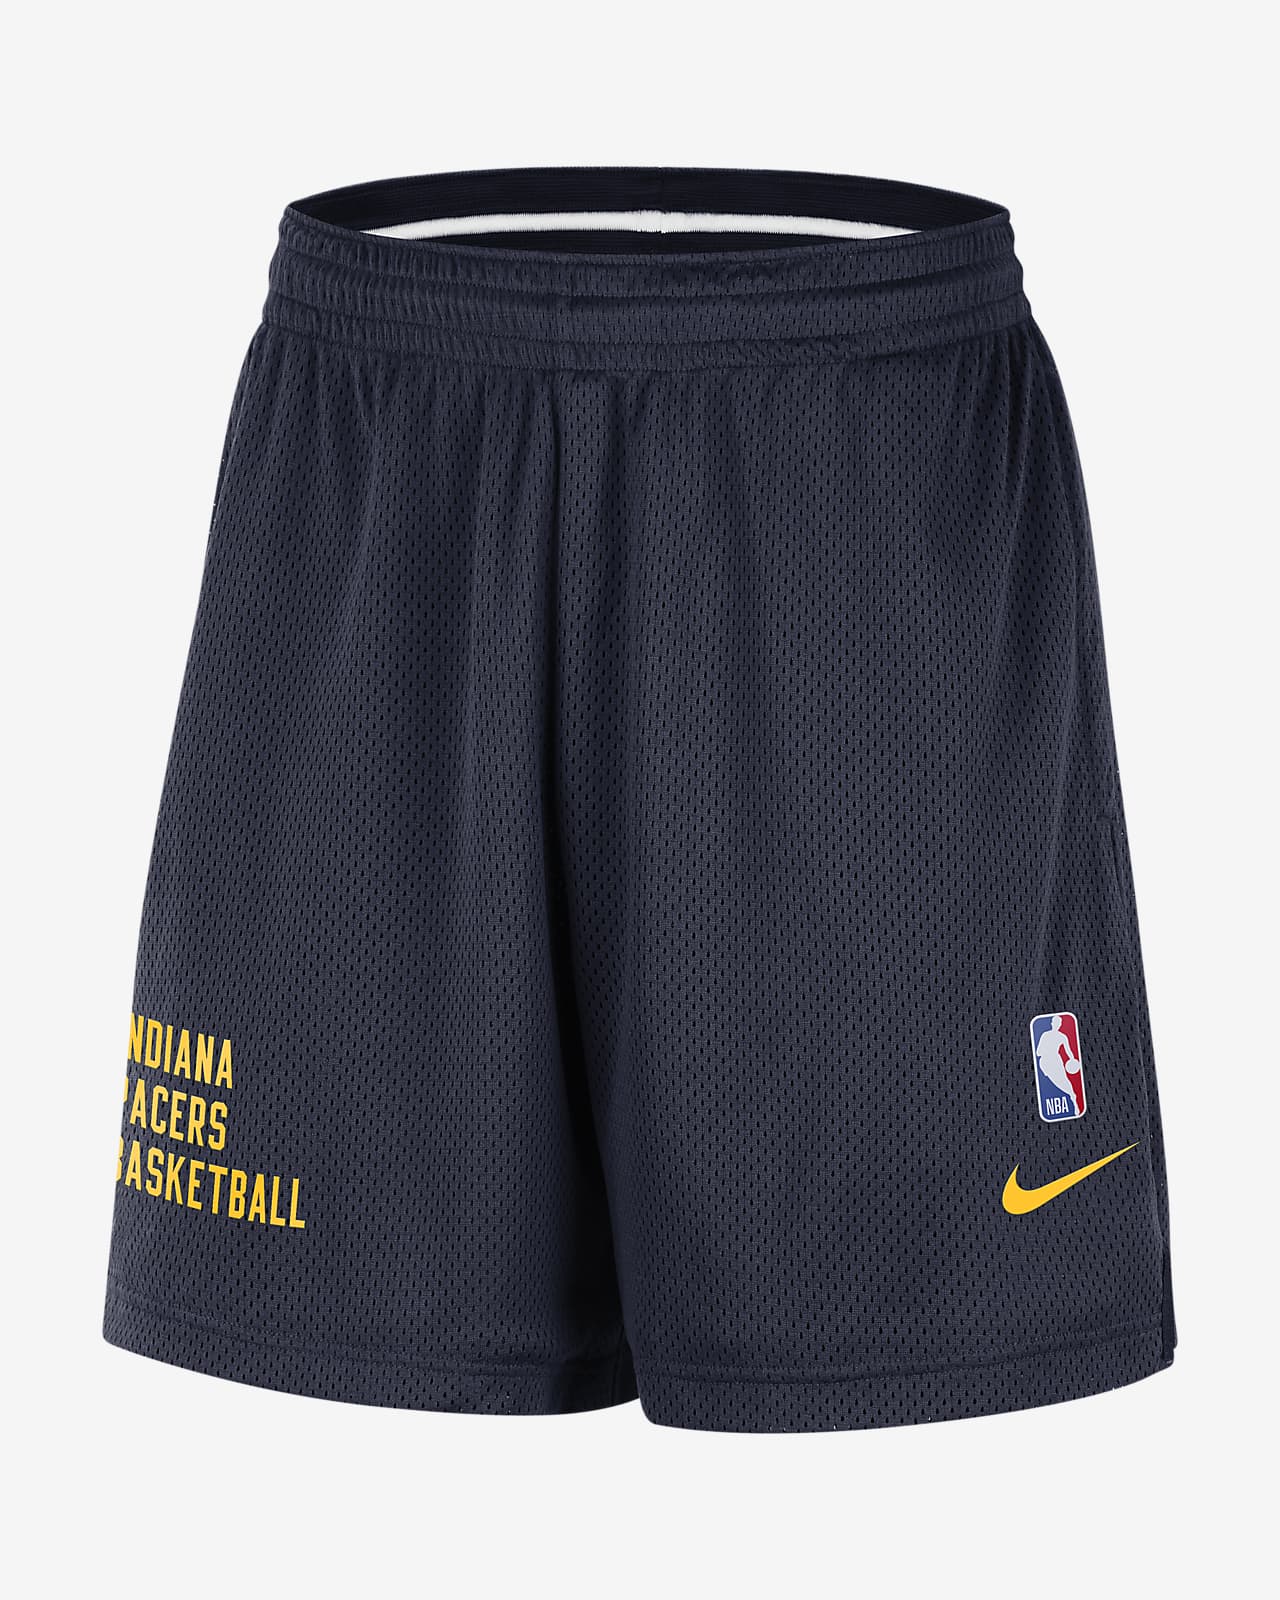 Indiana Pacers Men's Nike NBA Mesh Shorts